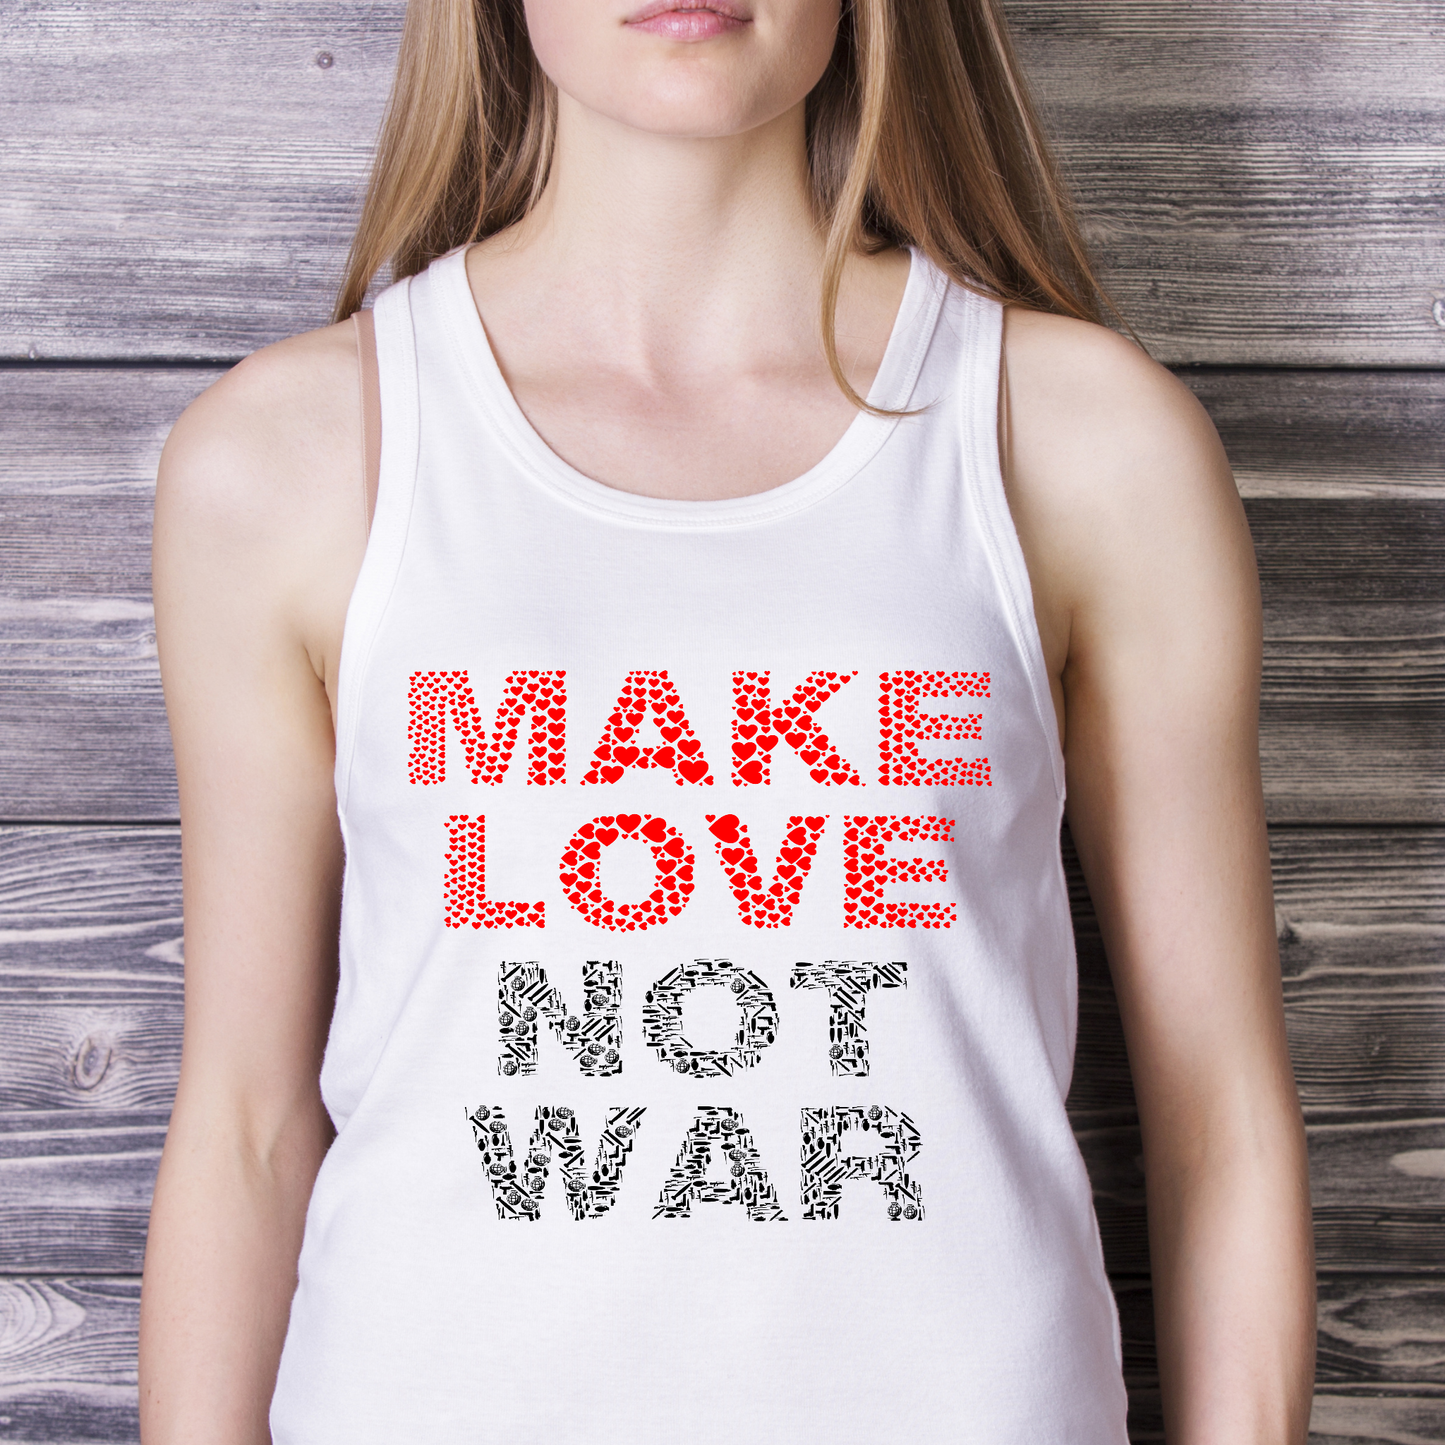 Make love not war Women's tank top - Premium t-shirt from MyDesigns - Just $21! Shop now at Lees Krazy Teez